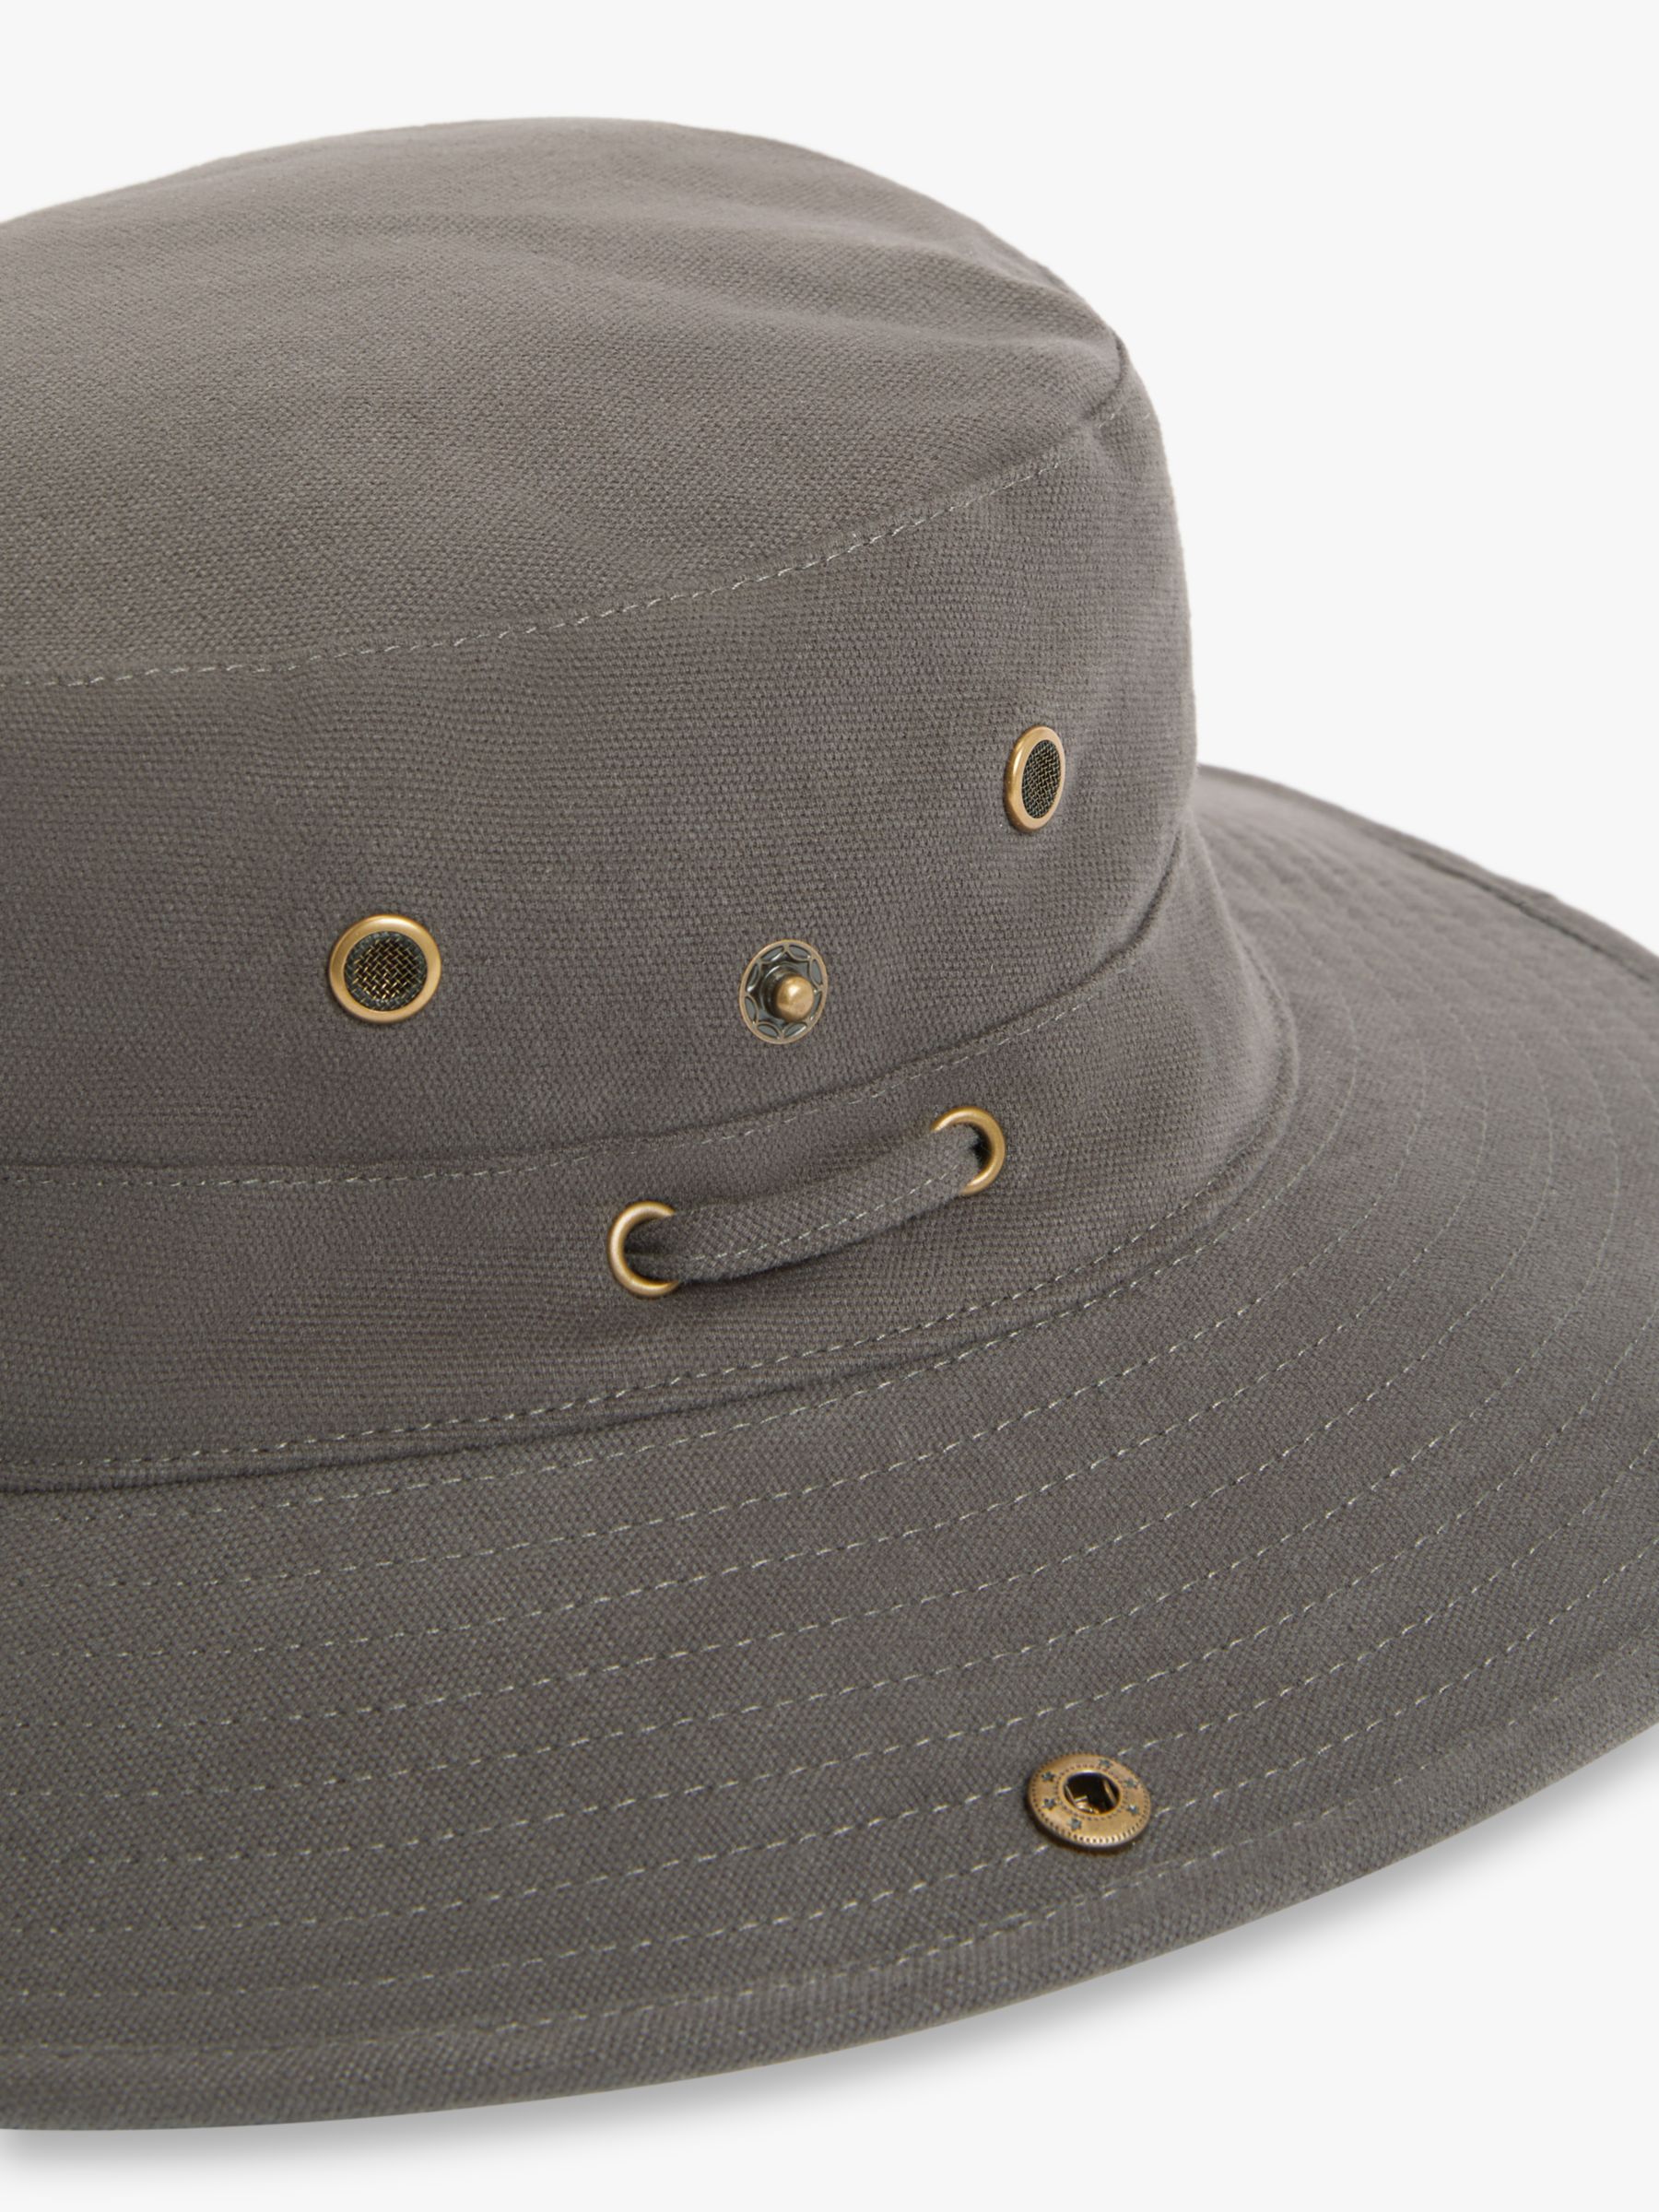 John Lewis Cotton Safari Hat, Charcoal, S-M